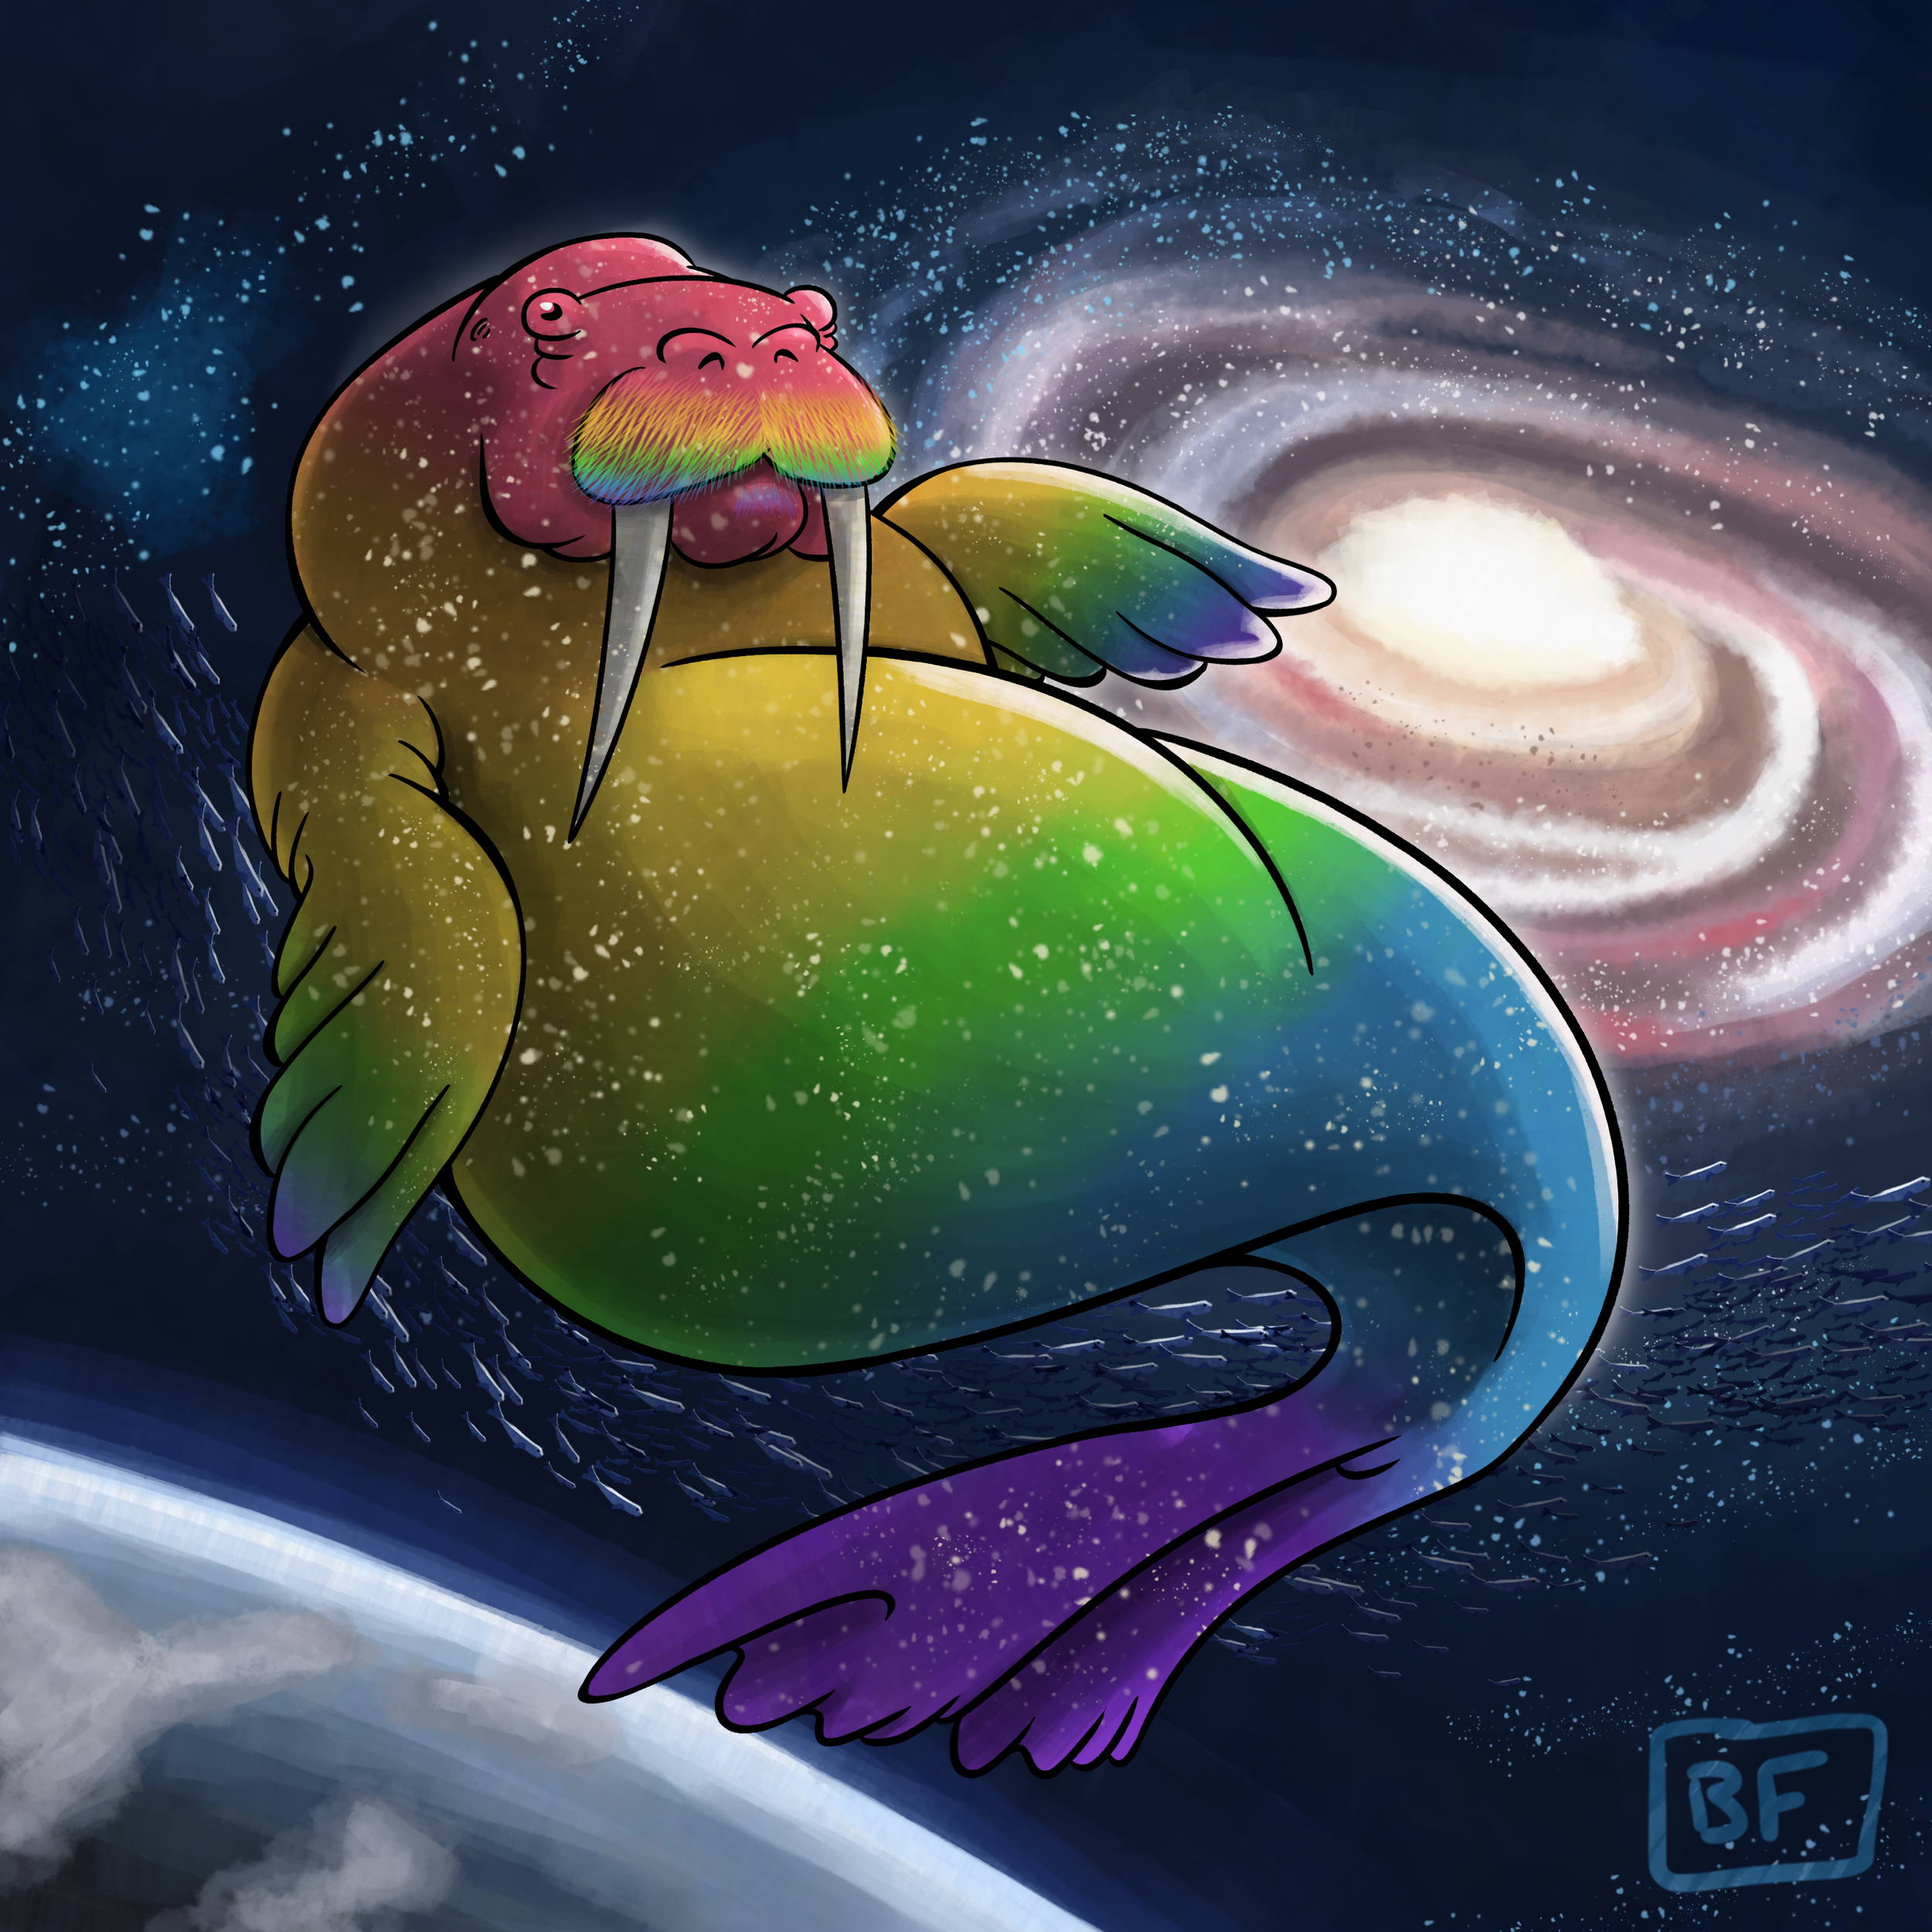 2. Rainbow Space Walrus